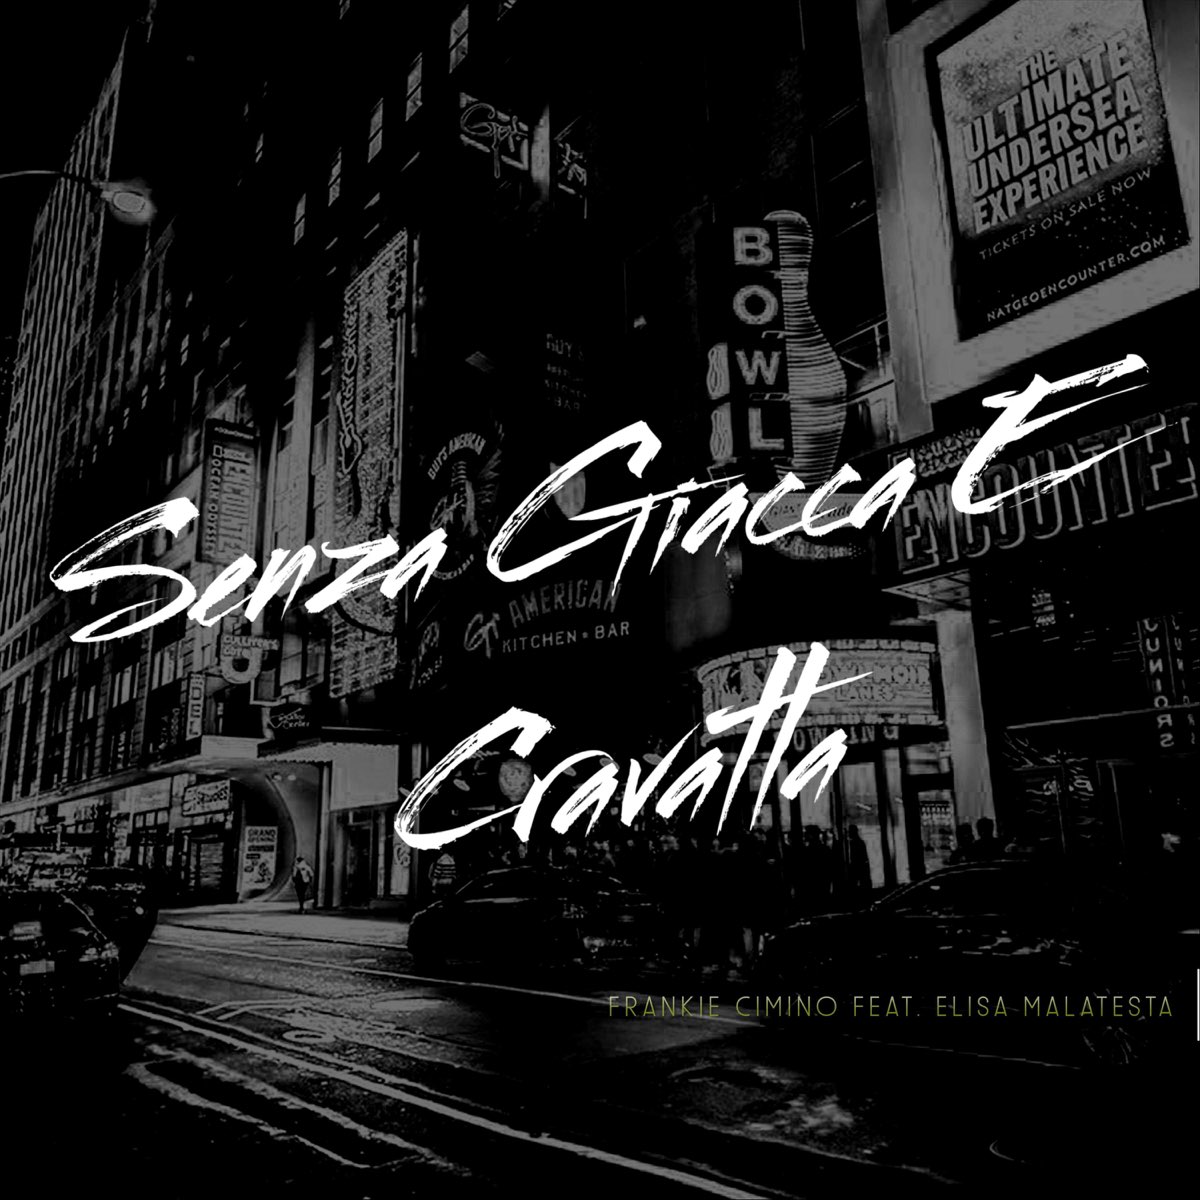 Senza Giacca E Cravatta (feat. Elisa Malatesta) - Single by Frankie Cimino  on Apple Music